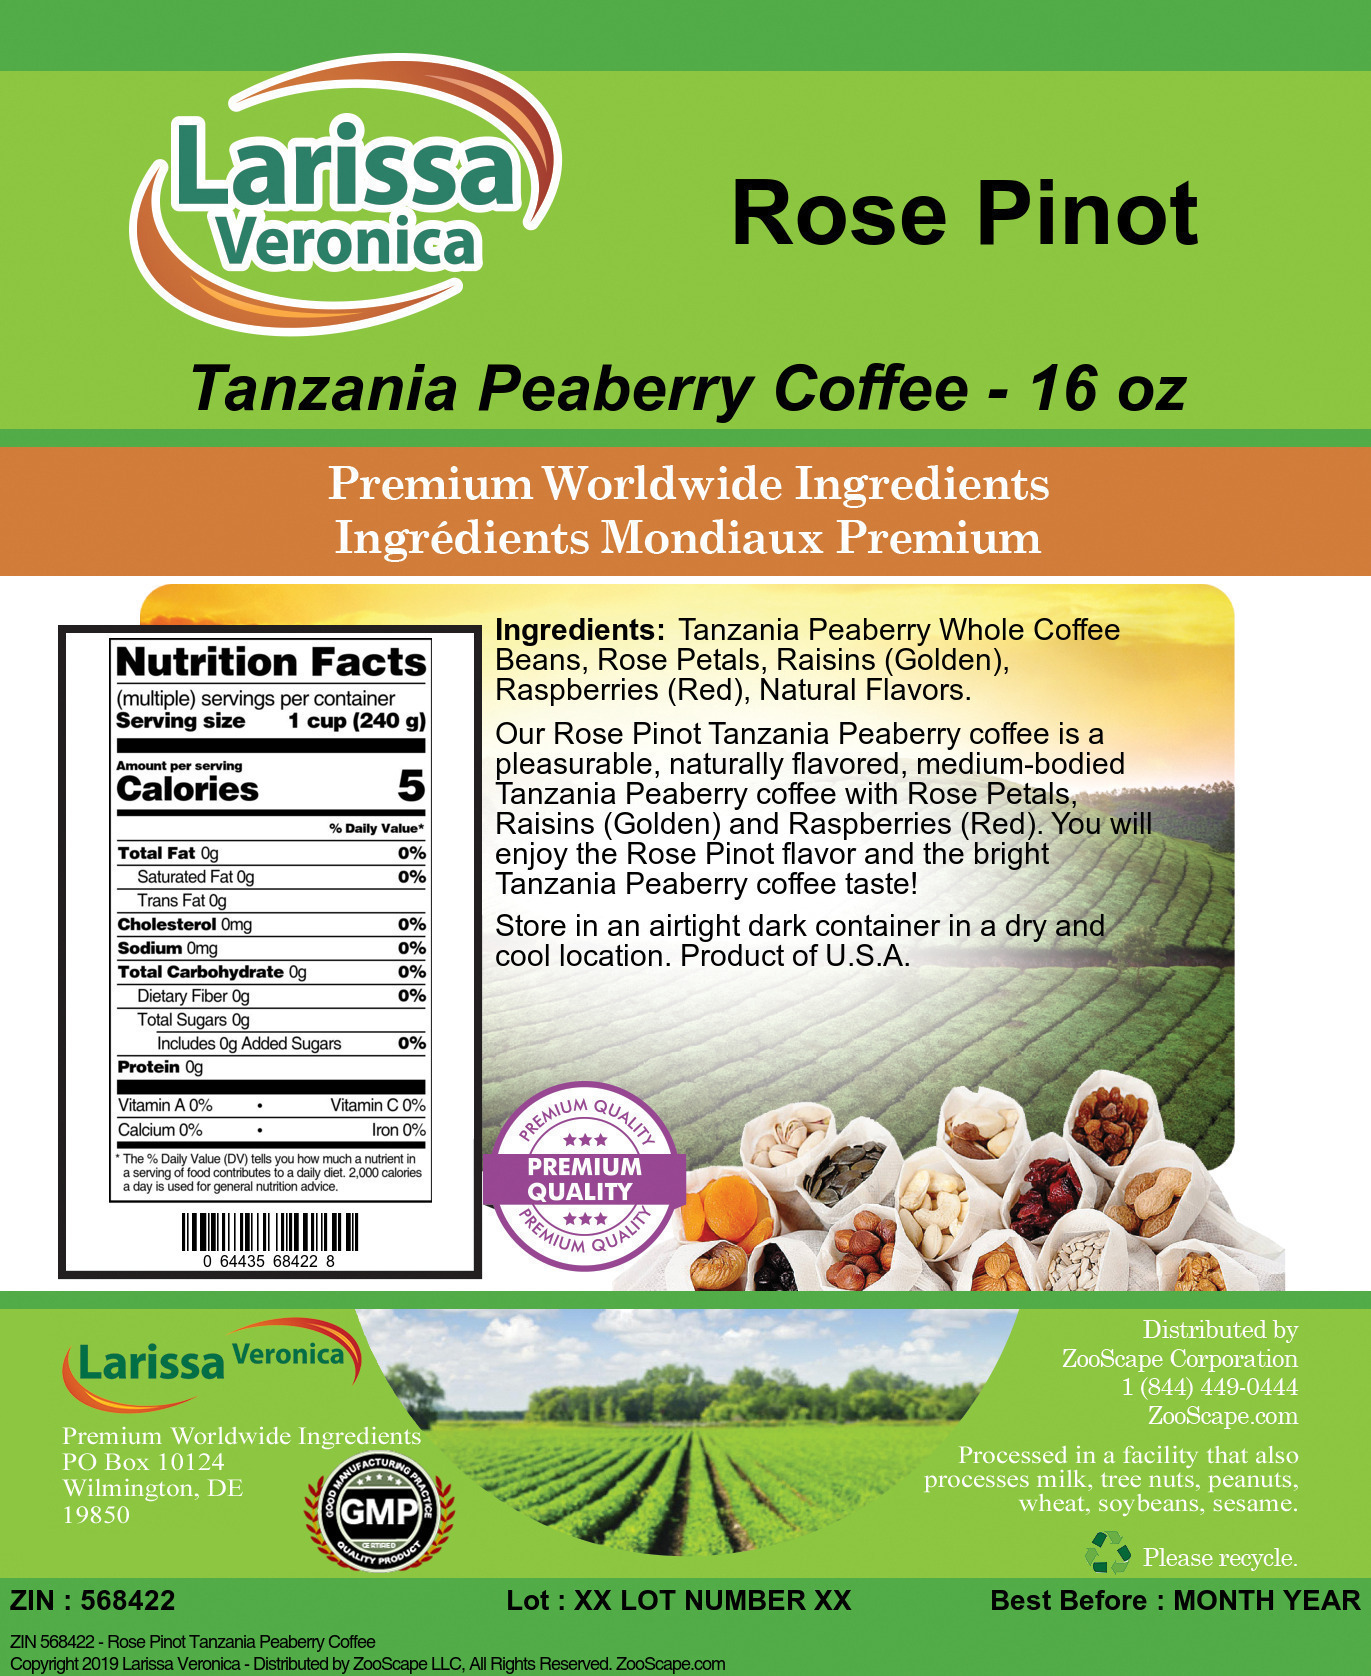 Rose Pinot Tanzania Peaberry Coffee - Label